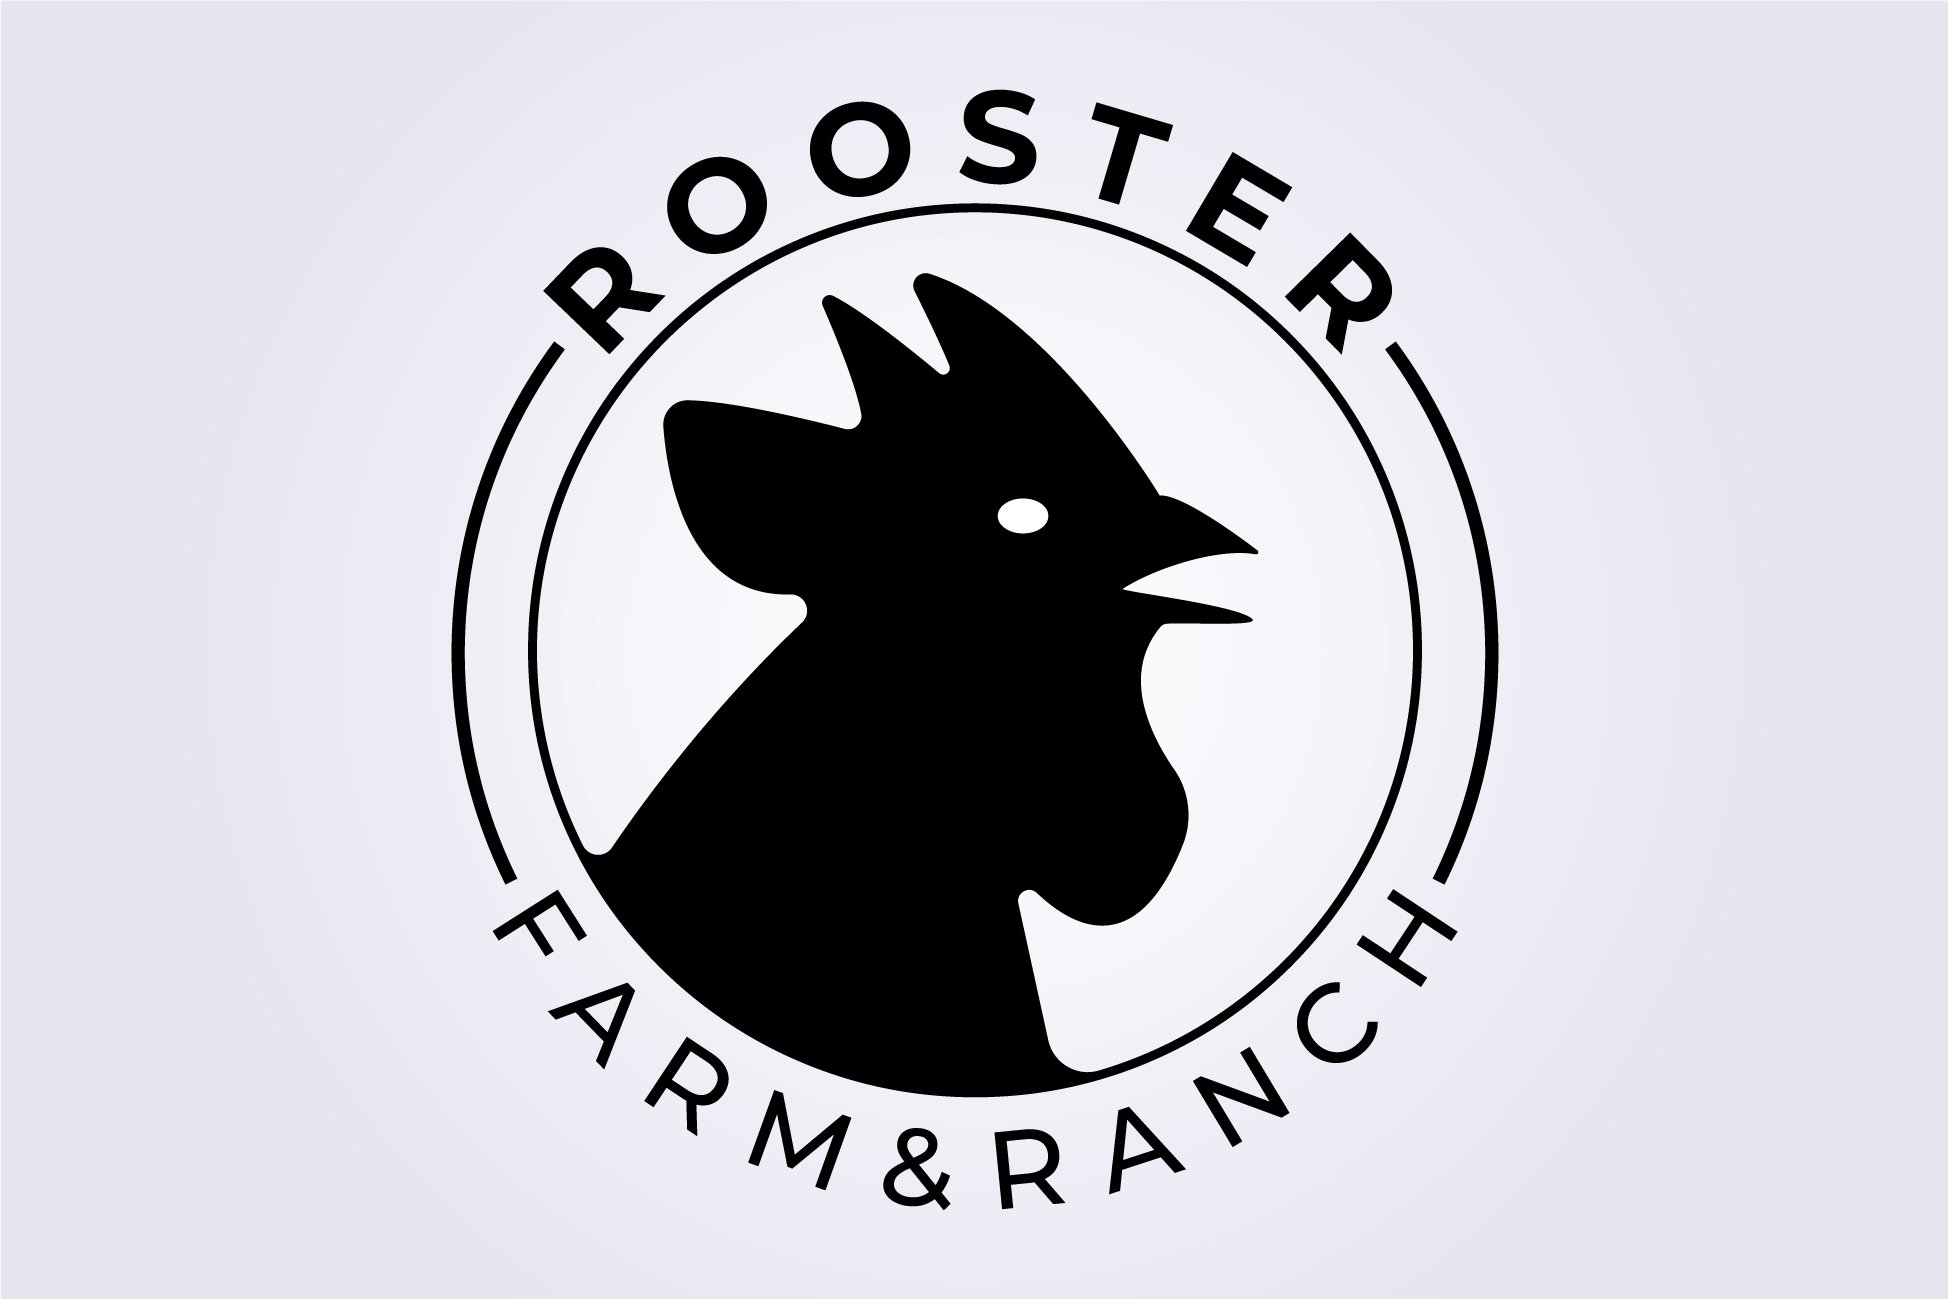 livestock logo rooster vectoricon cover image.